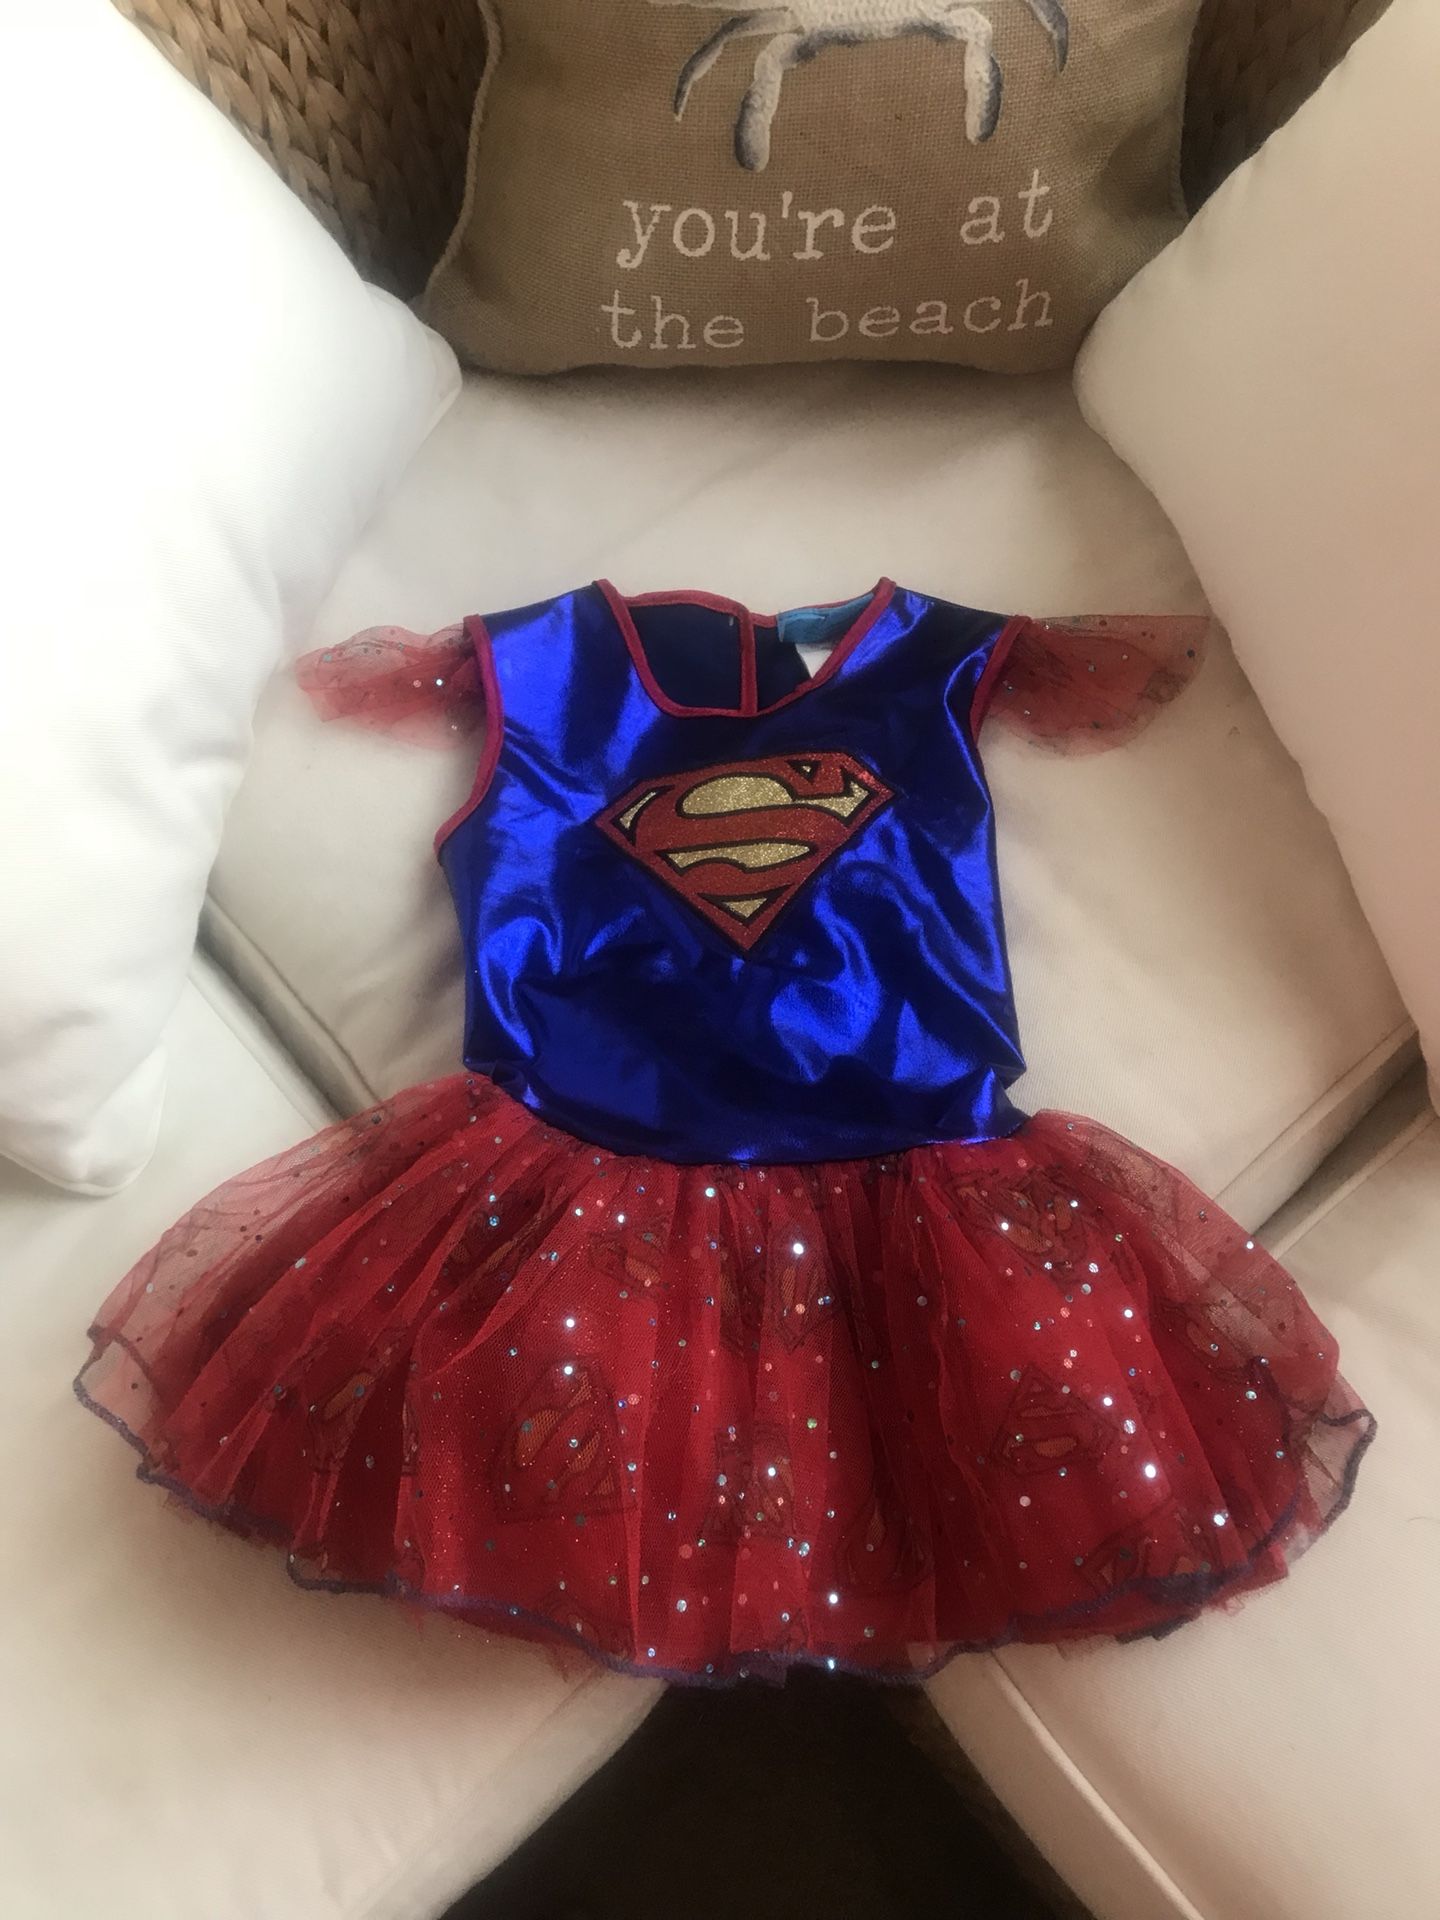 Super Girl and Mermaid costume